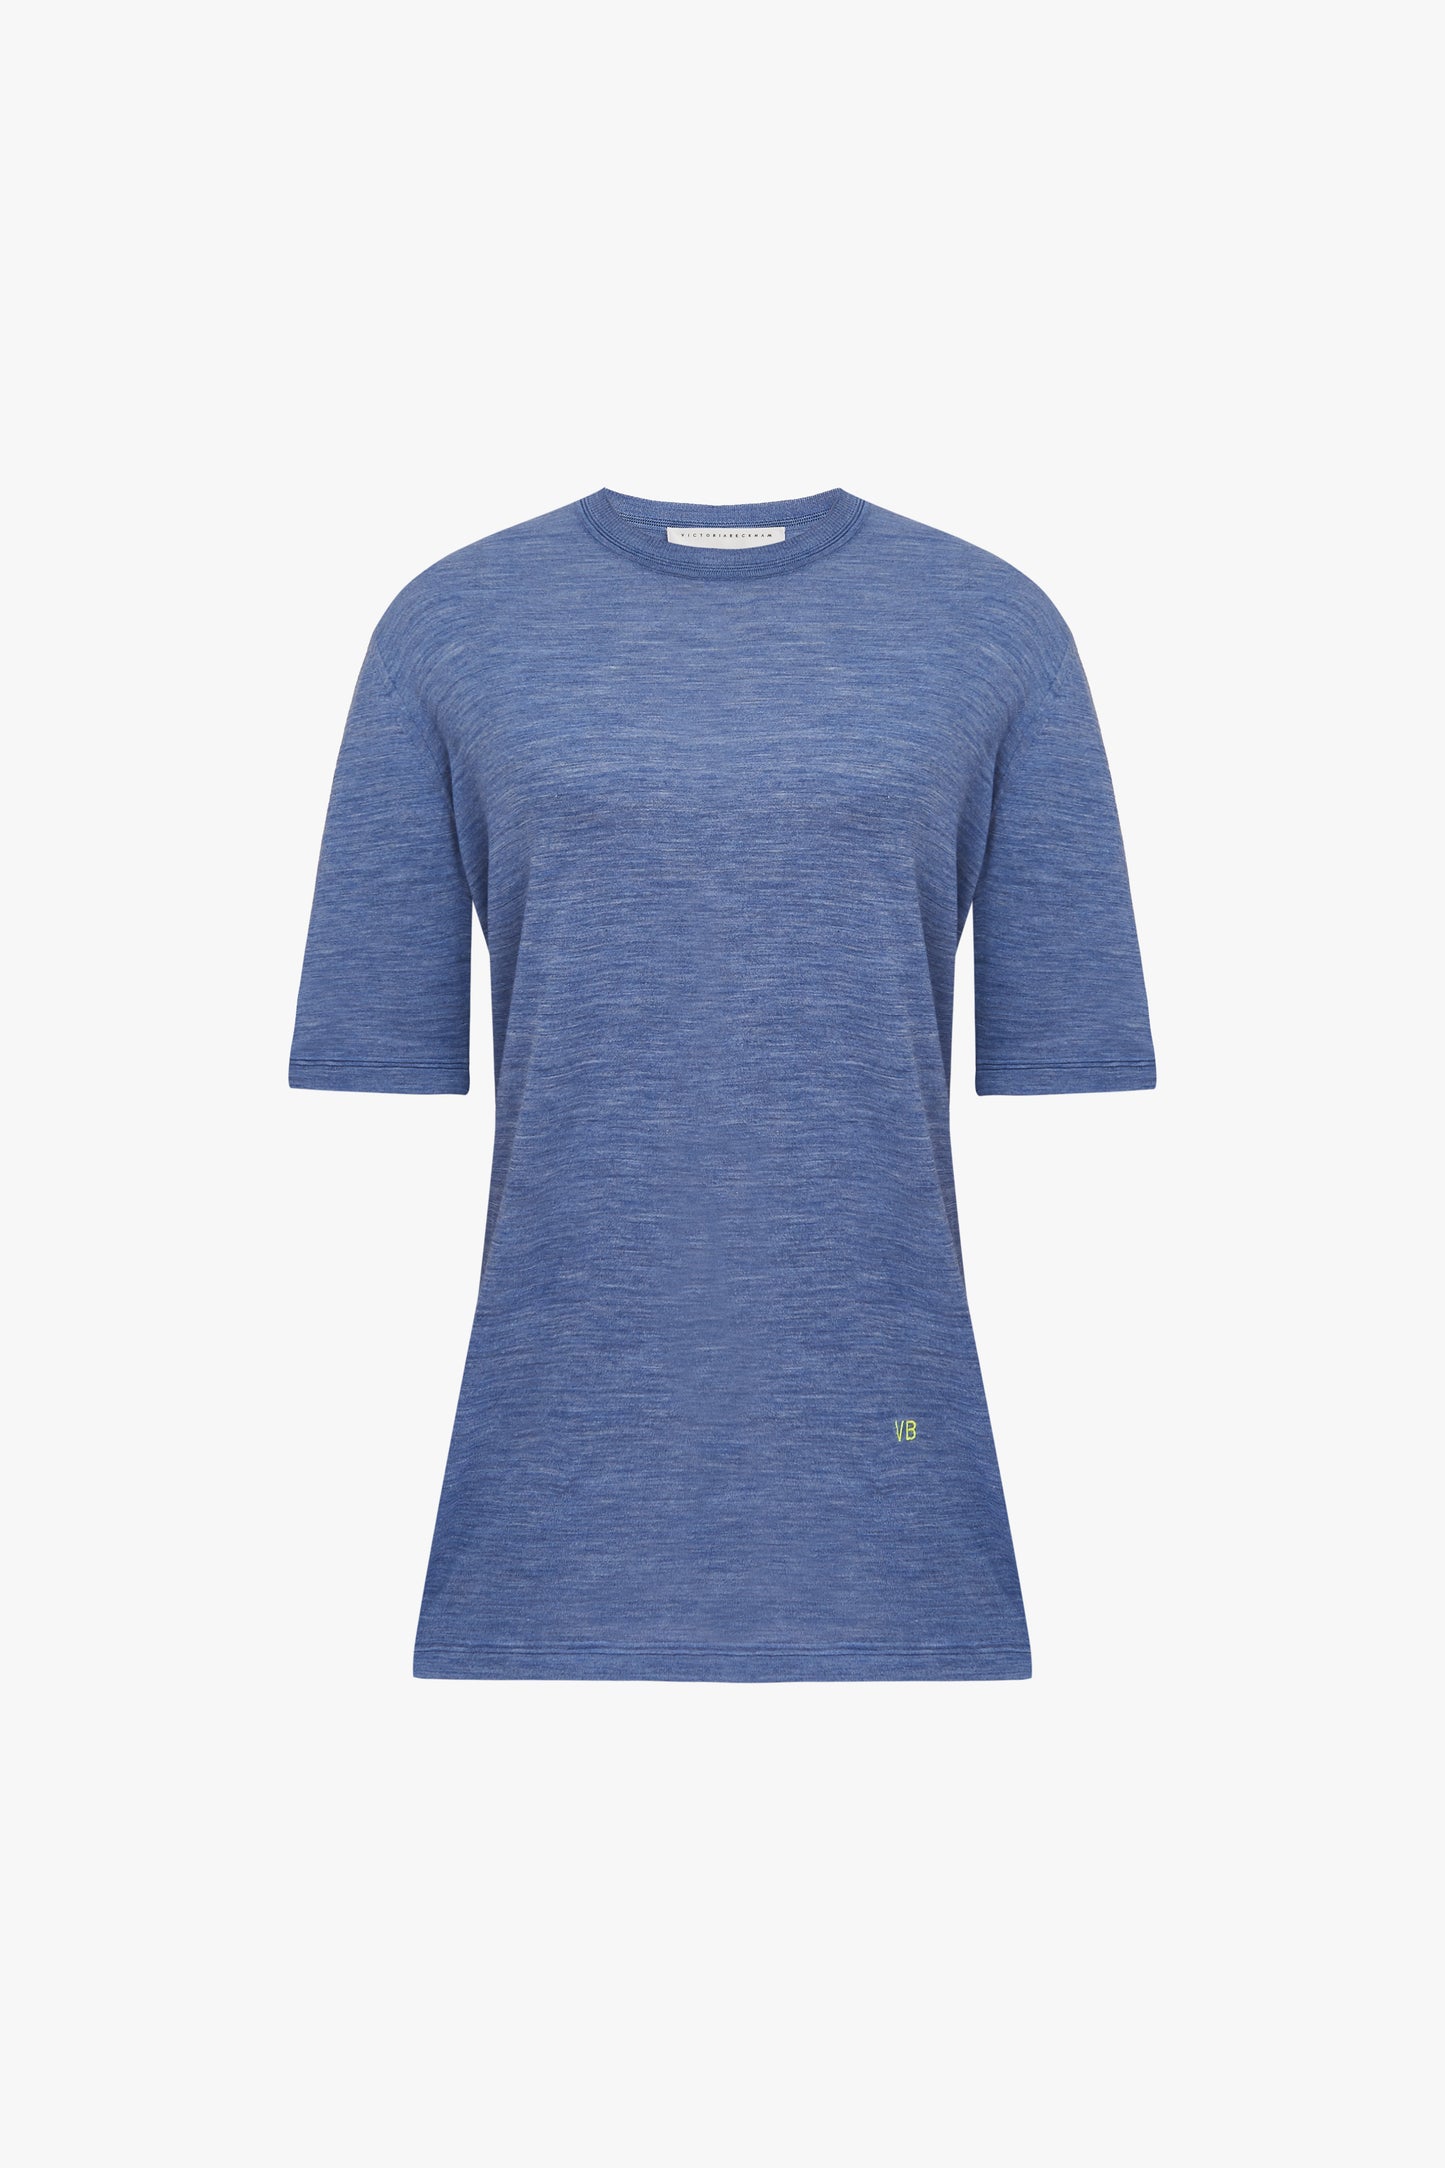 Knitted T-Shirt in Blue Melange